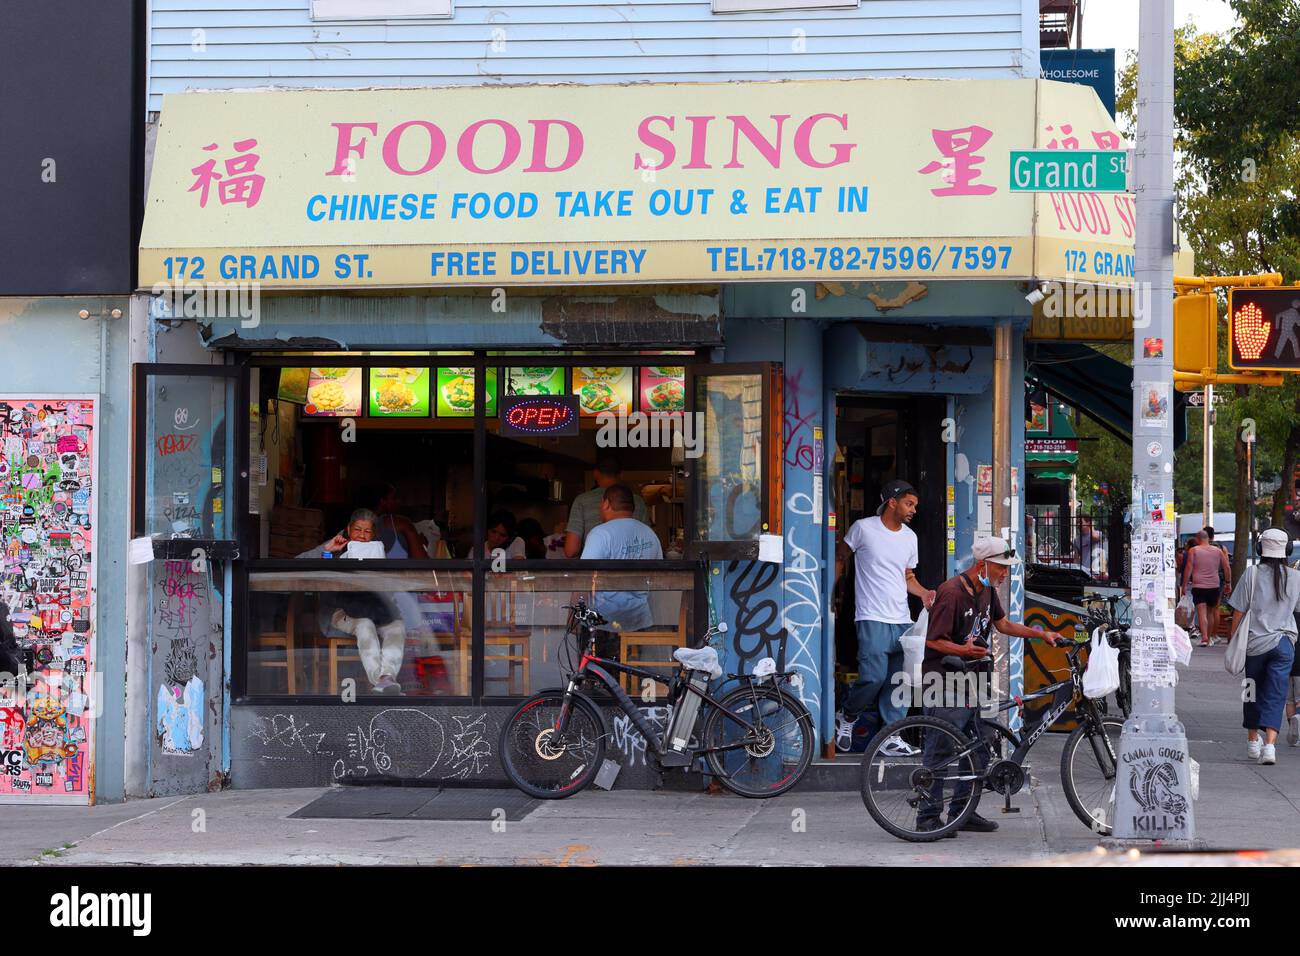 Food Sing, 172 Grand St, Brooklyn, NY. Façade extérieure d'un restaurant chinois à emporter dans le quartier de Williamsburg. Banque D'Images